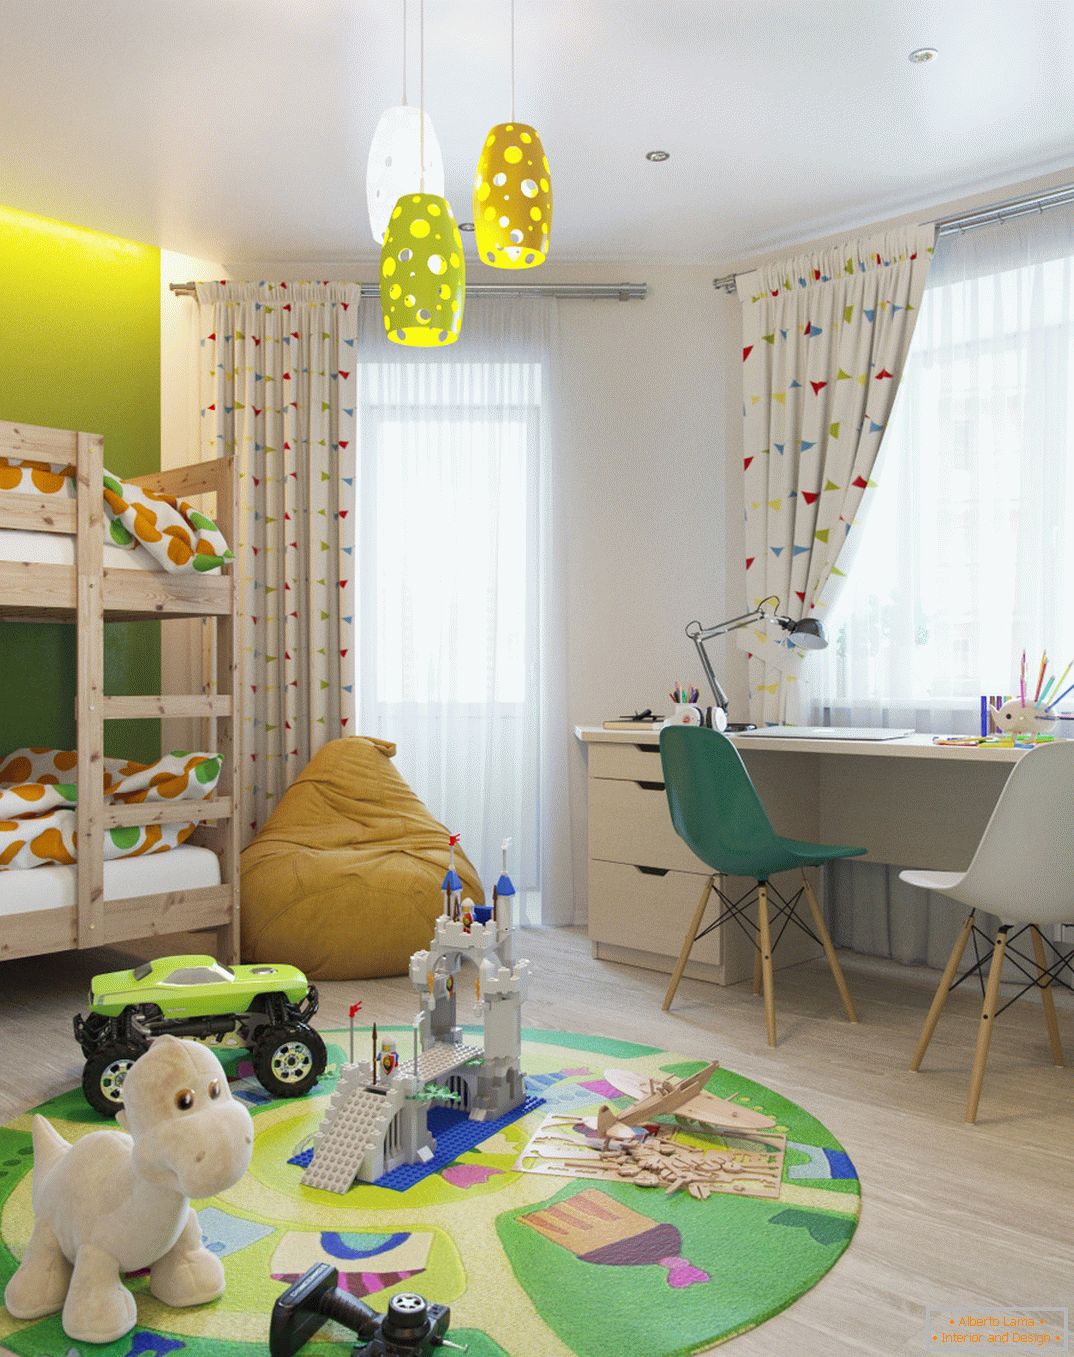 Bright design of the children's room